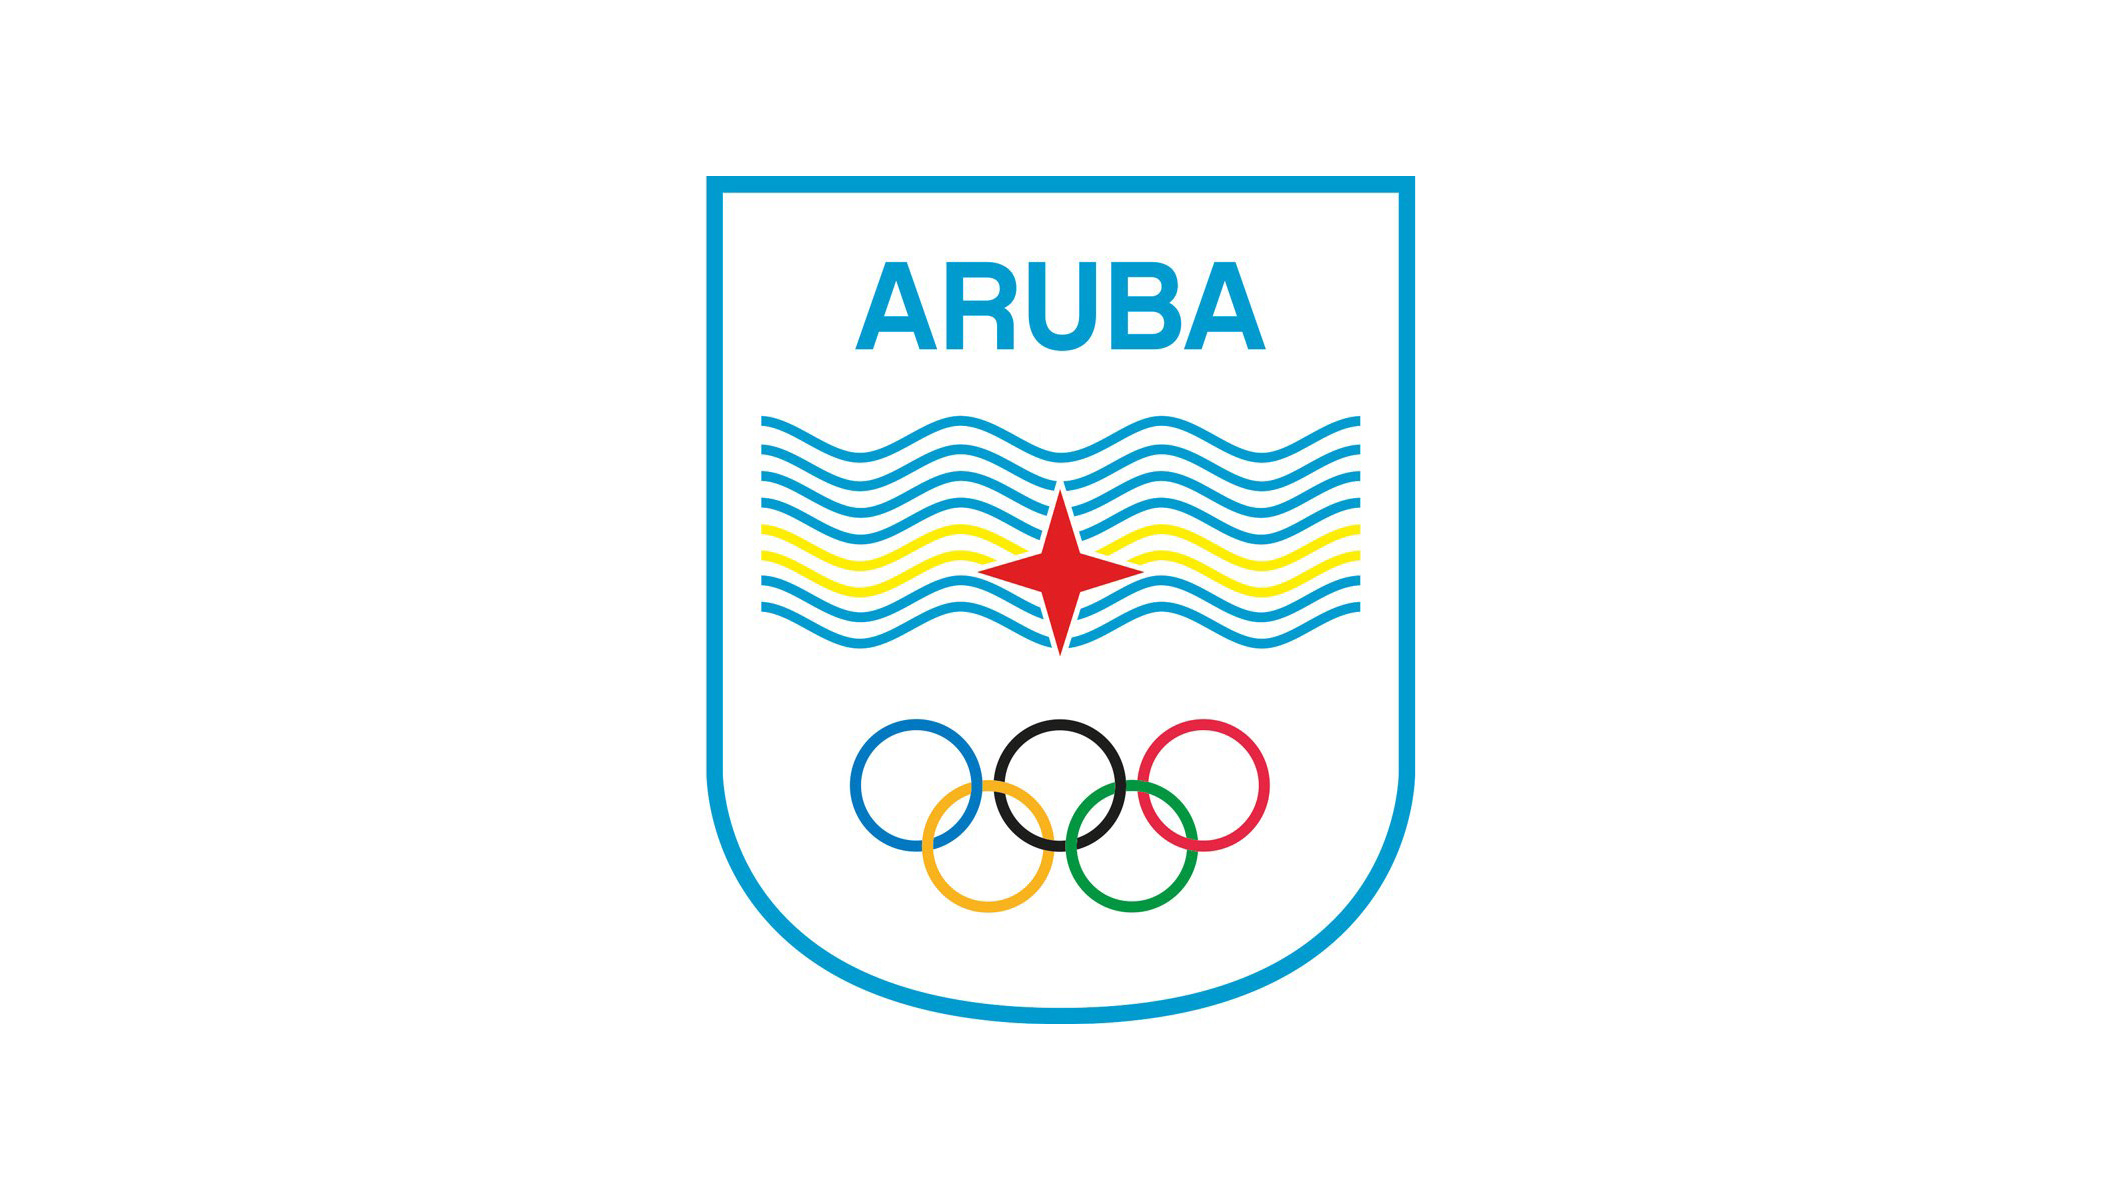 Aruba - National Olympic Committee (NOC)